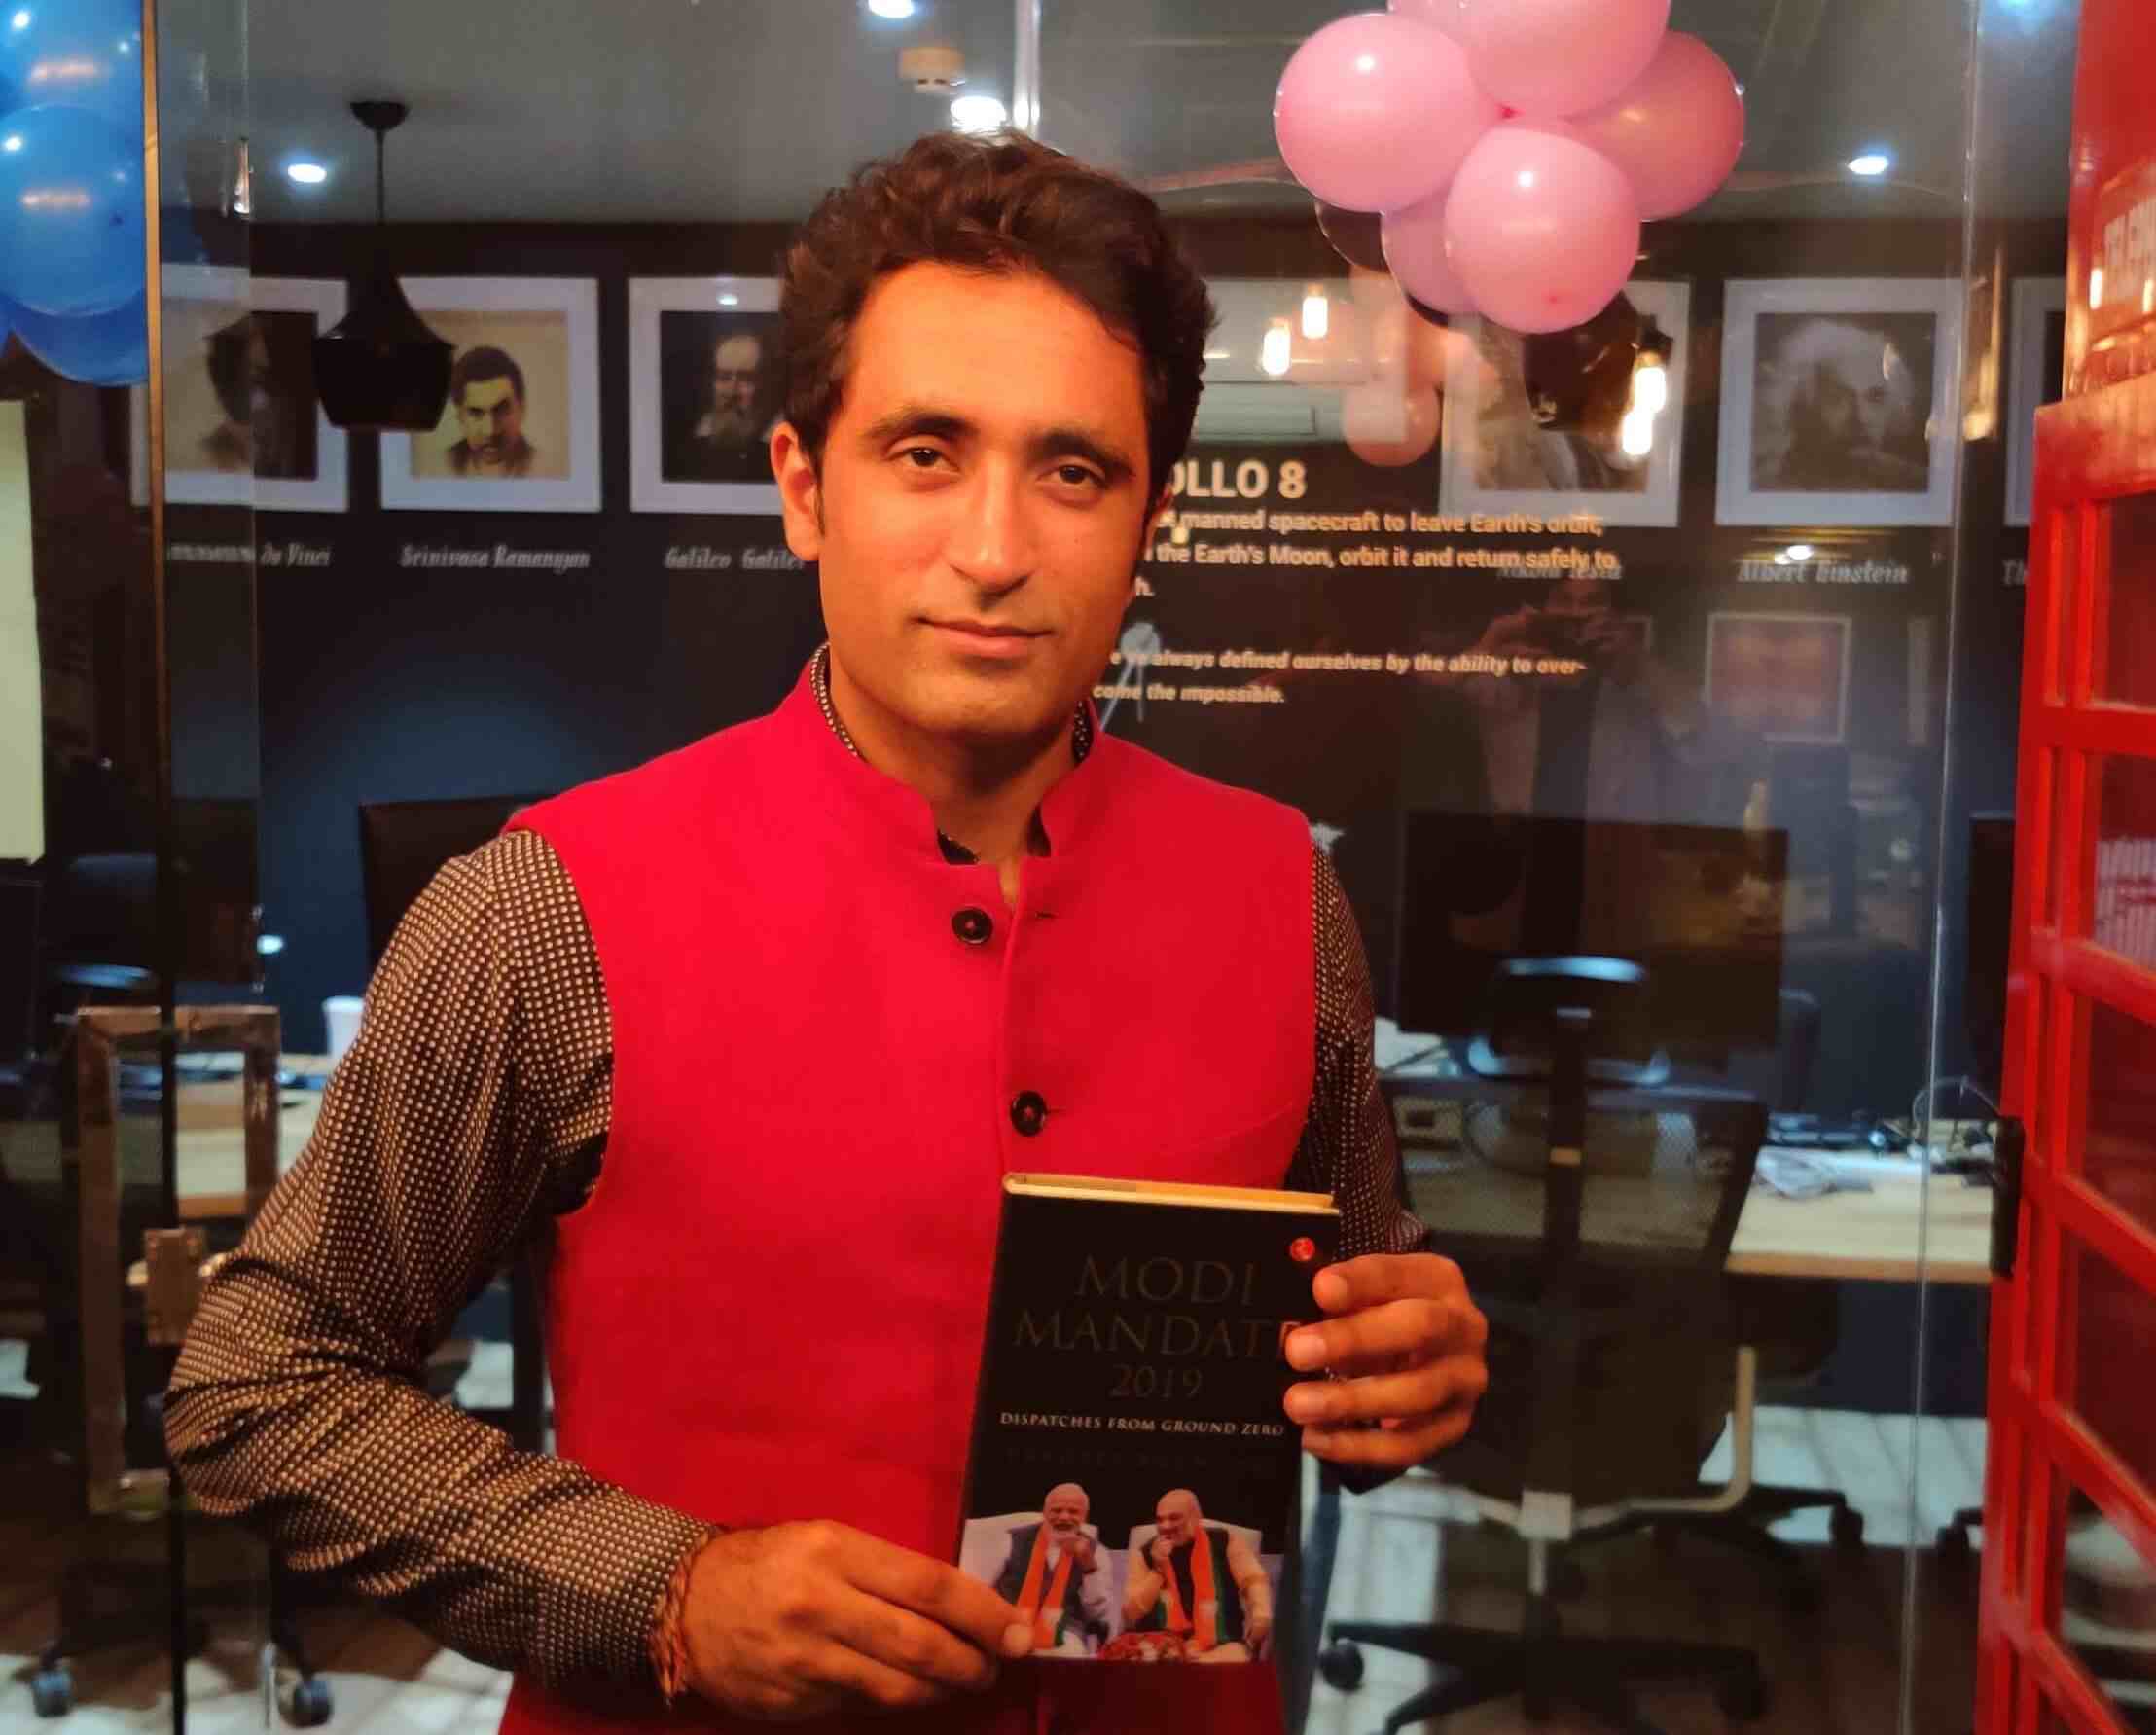 Pradeep Bhandari with his book 